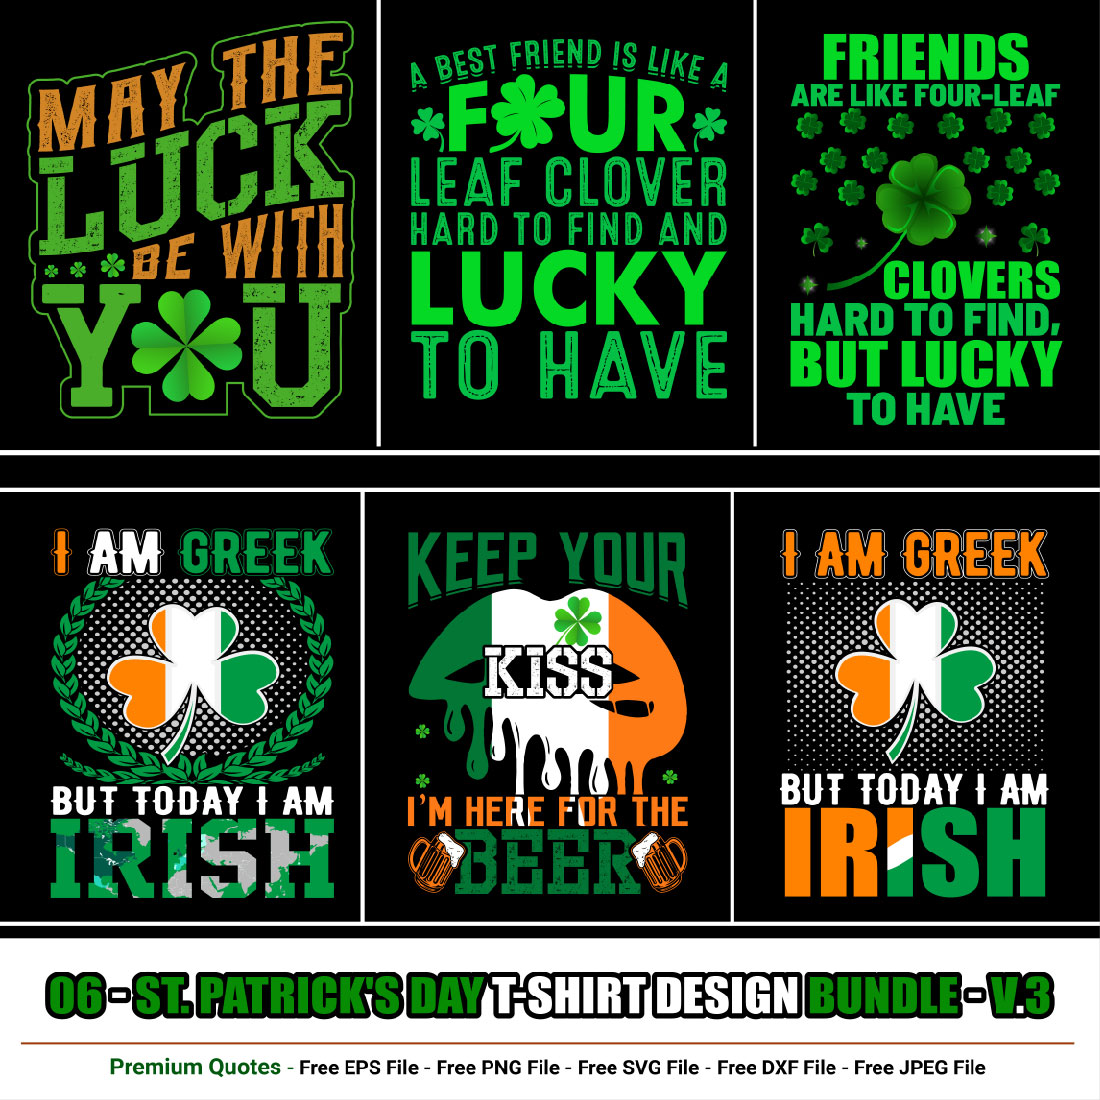 St Patrick’s Day T-shirt Design Bundle cover image.